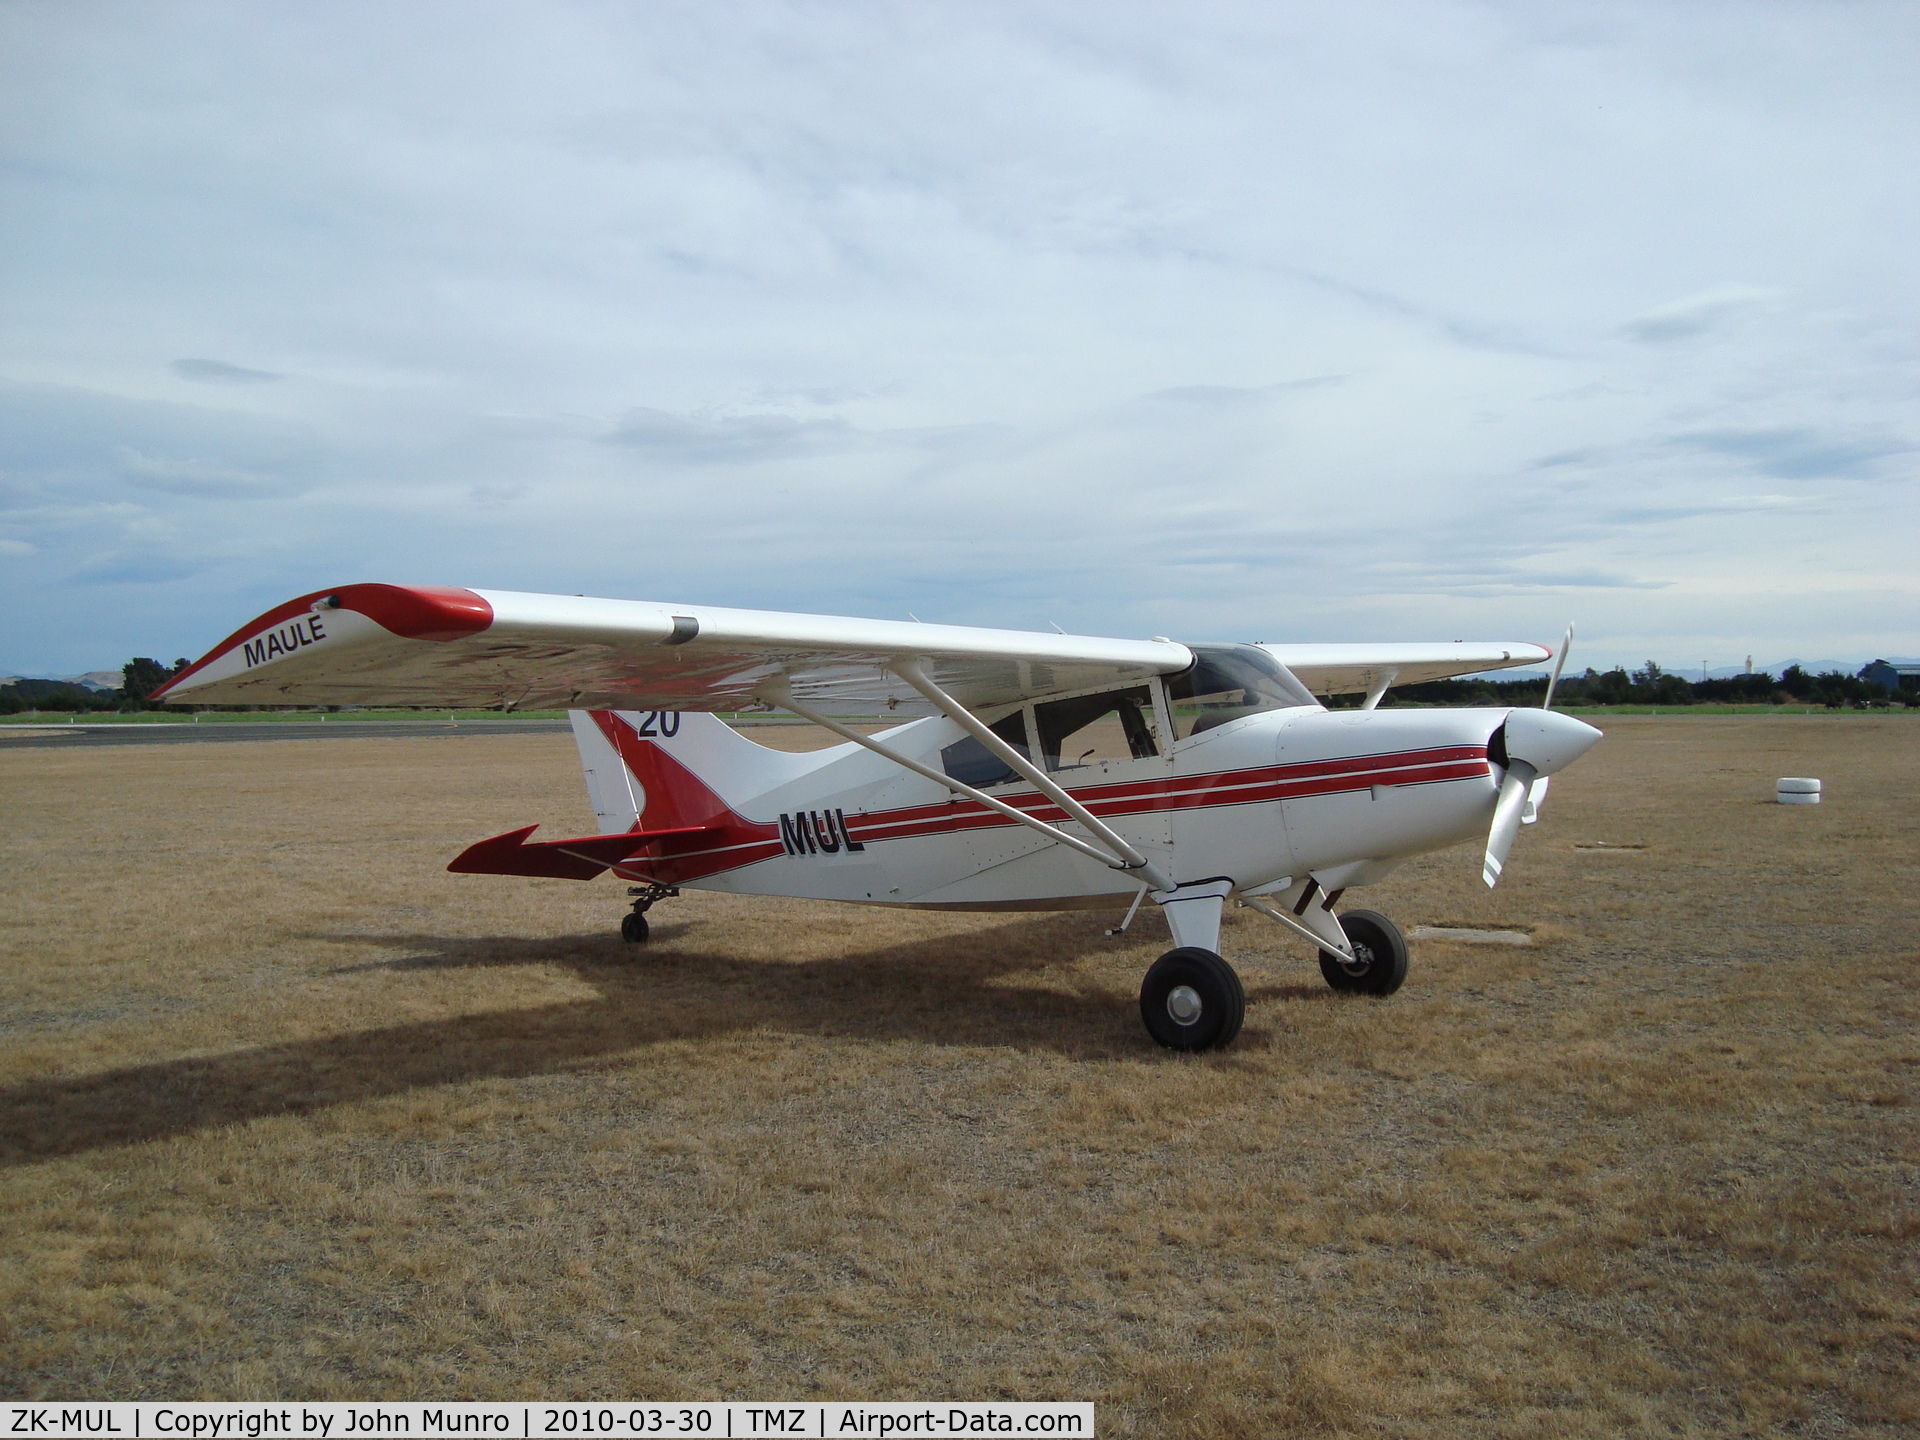 ZK-MUL, 1997 Maule MX-7-180A Sportplane C/N 20052C, Captured on March 30,2010.